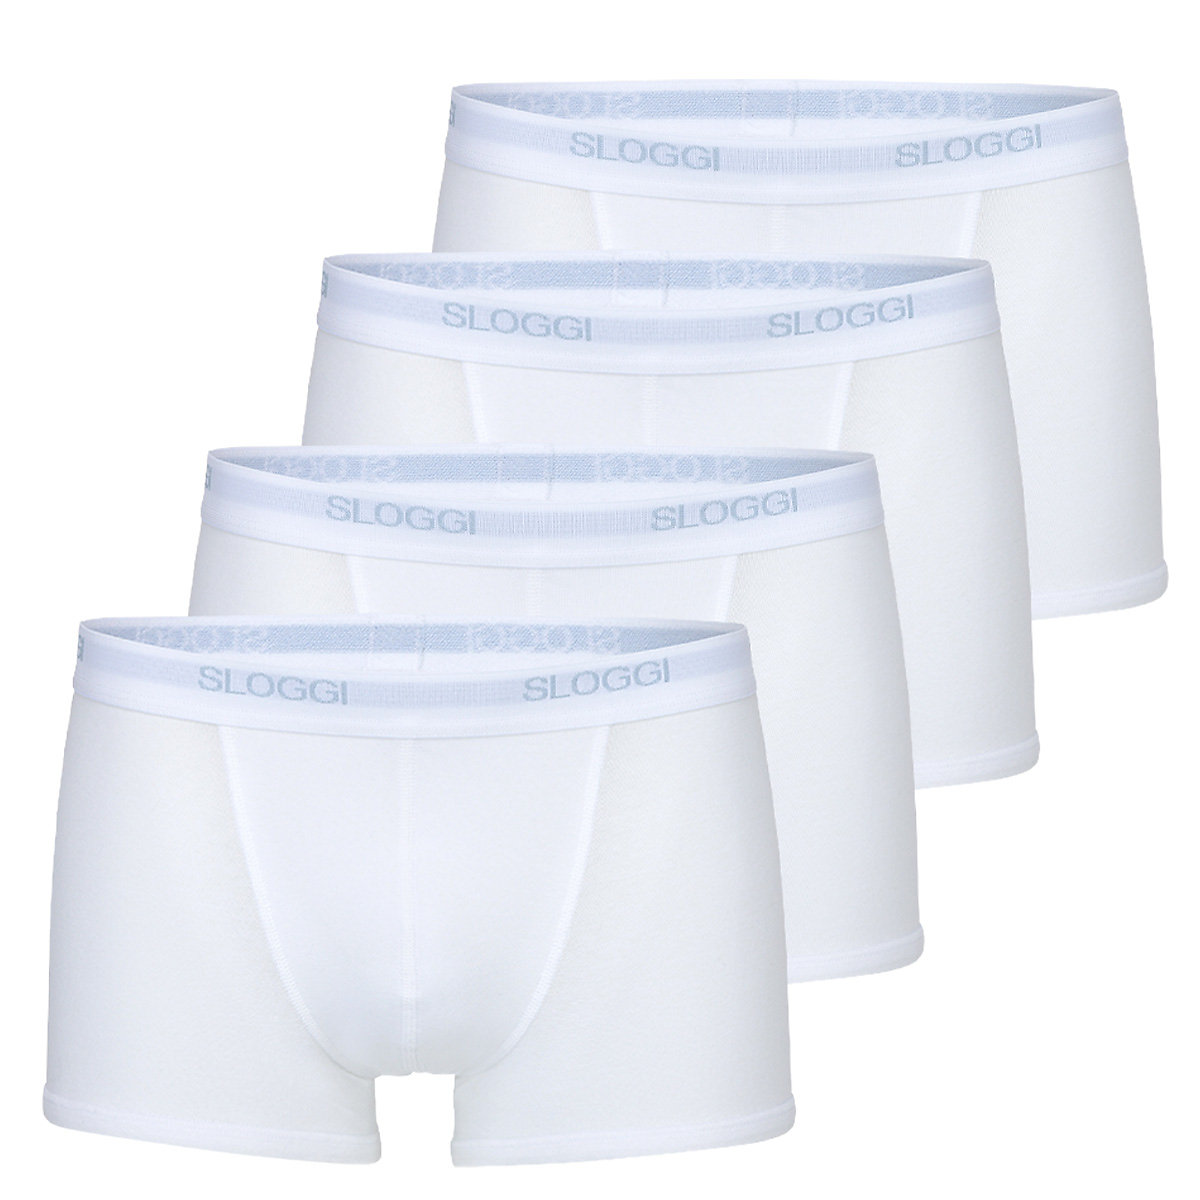 sloggi Retro-Short / Pant 4er Pack Basic Panties weiß